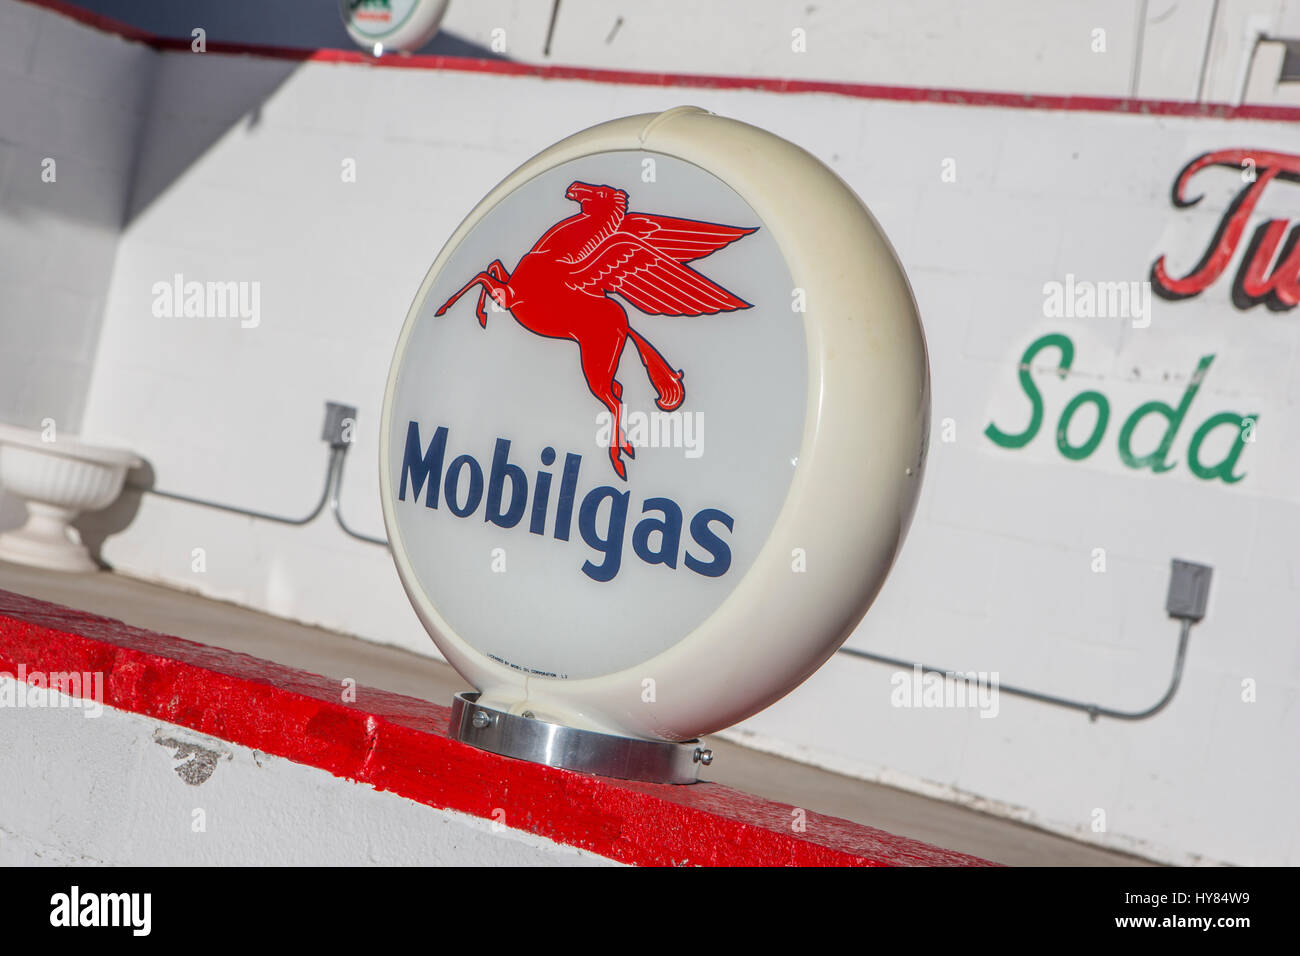 Mobilgas Gasoline sign Stock Photo